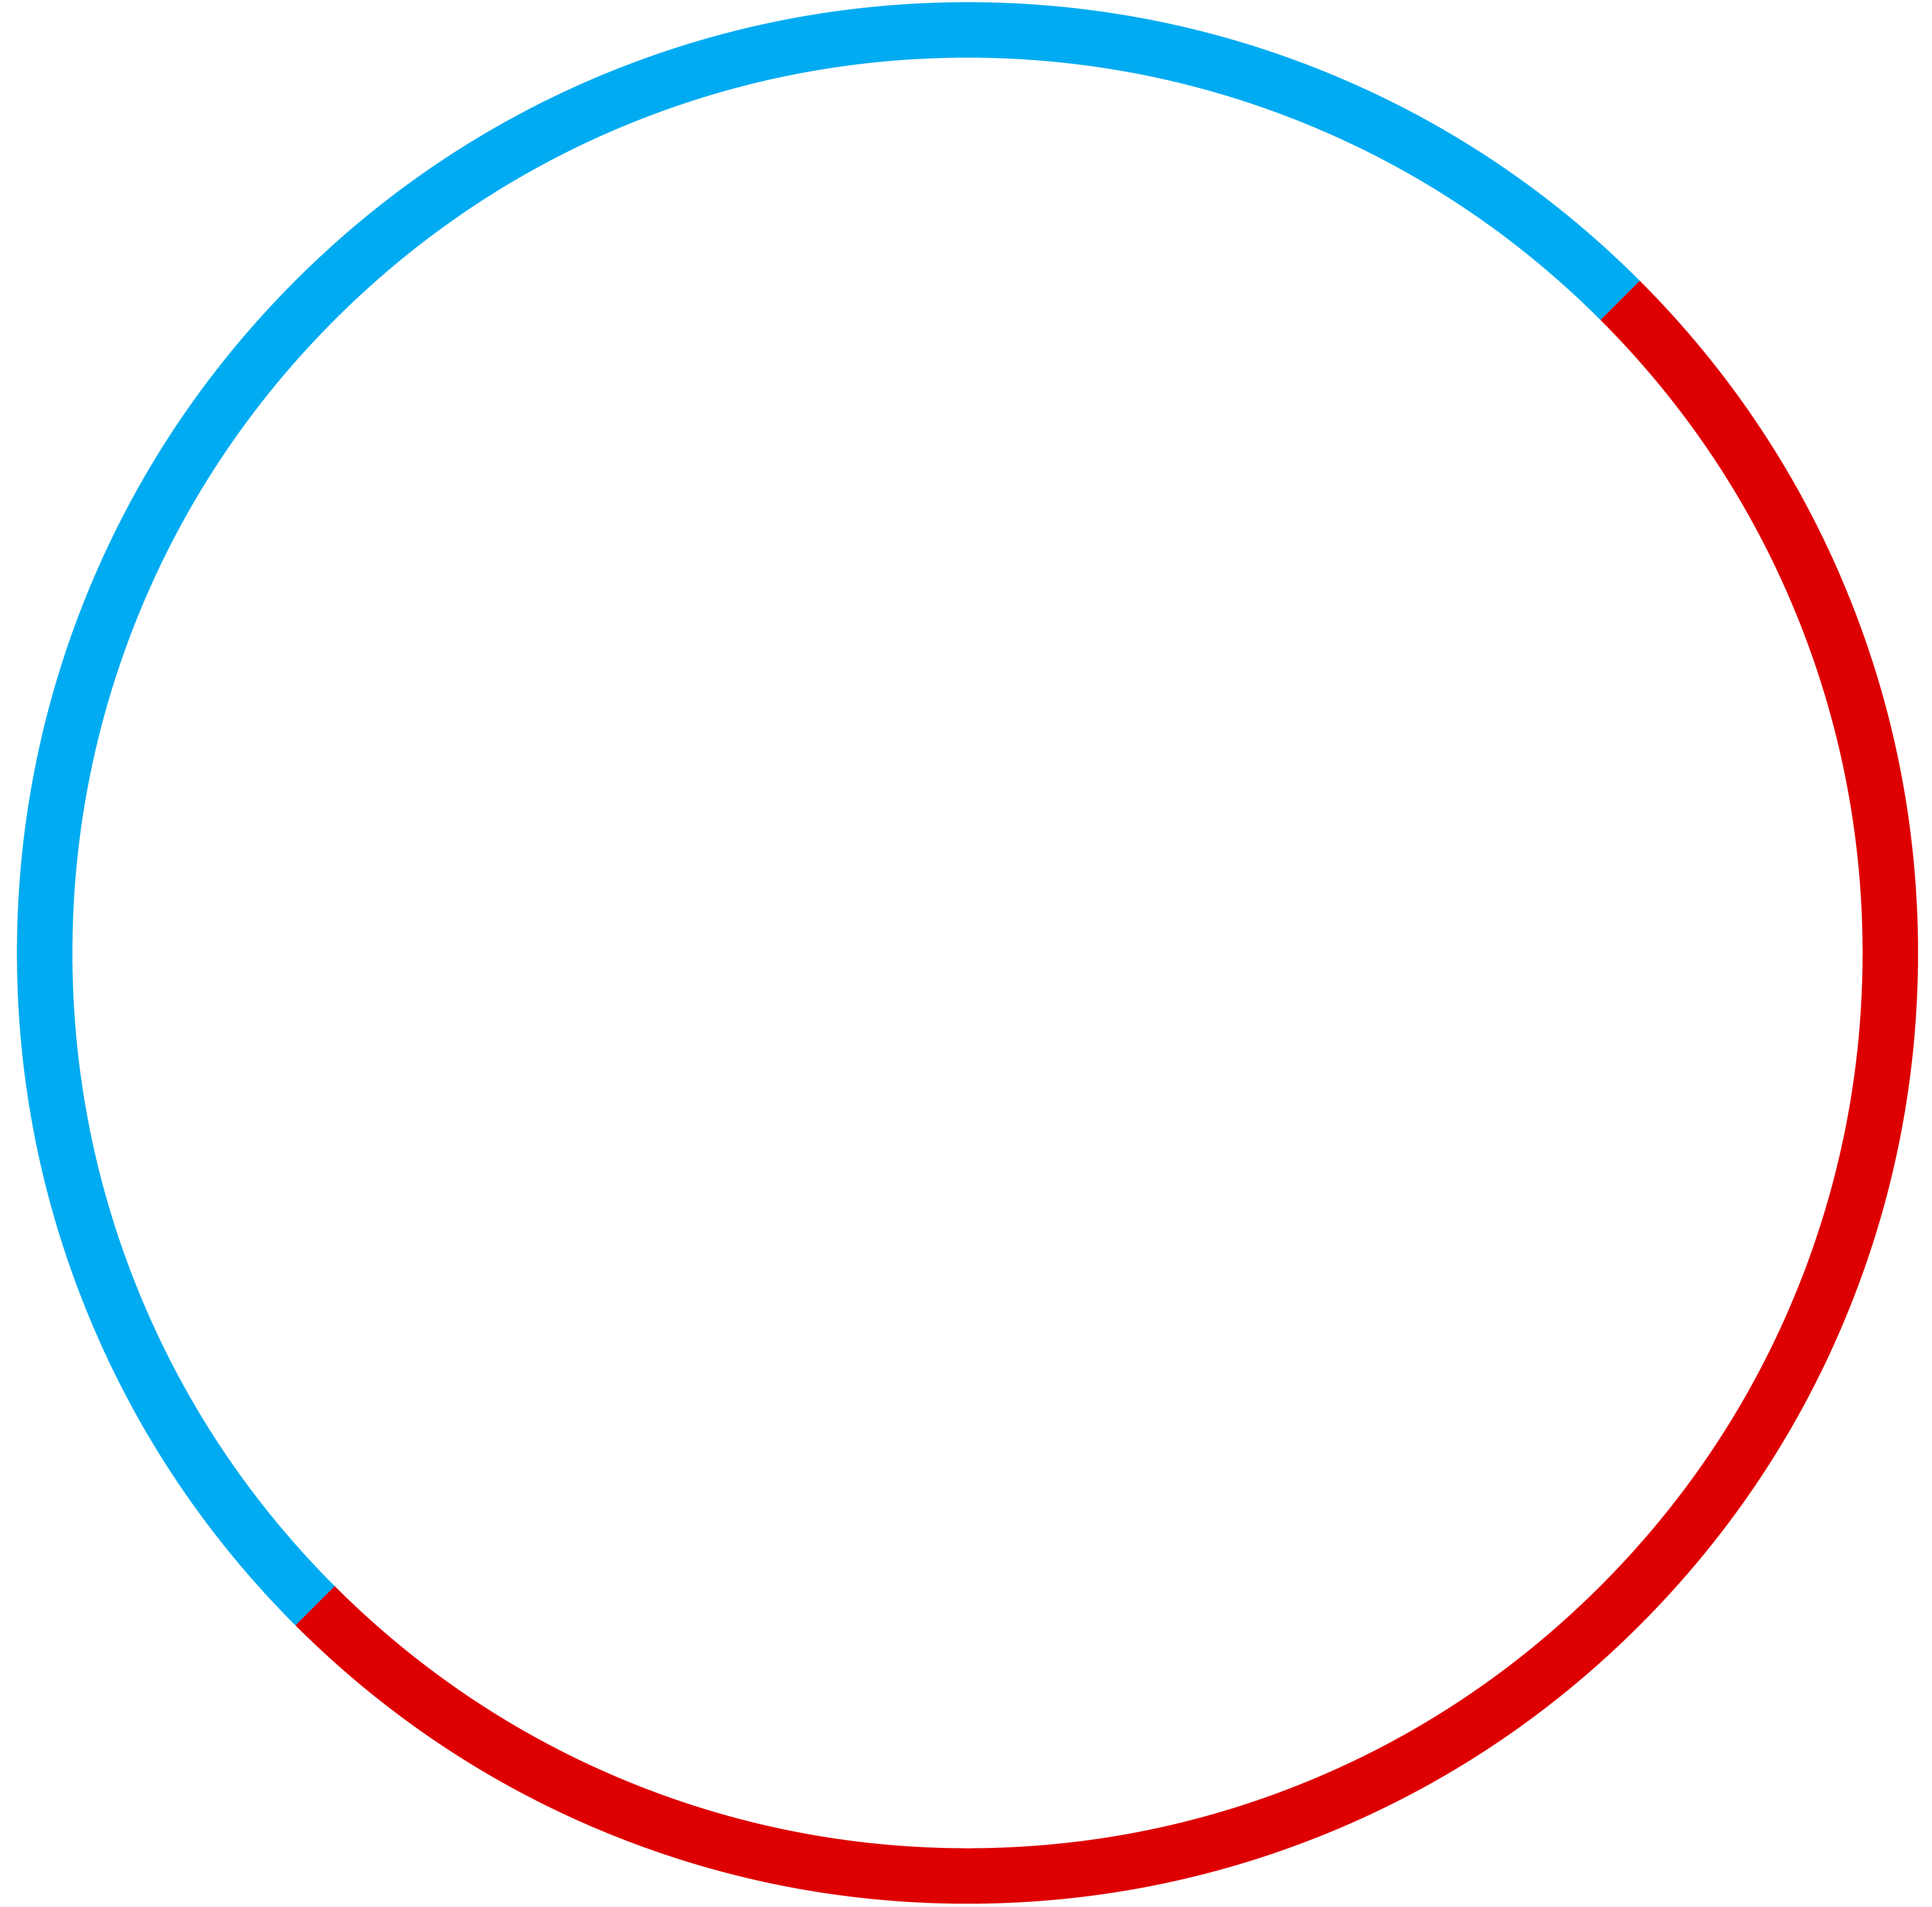 logo campuswave radio